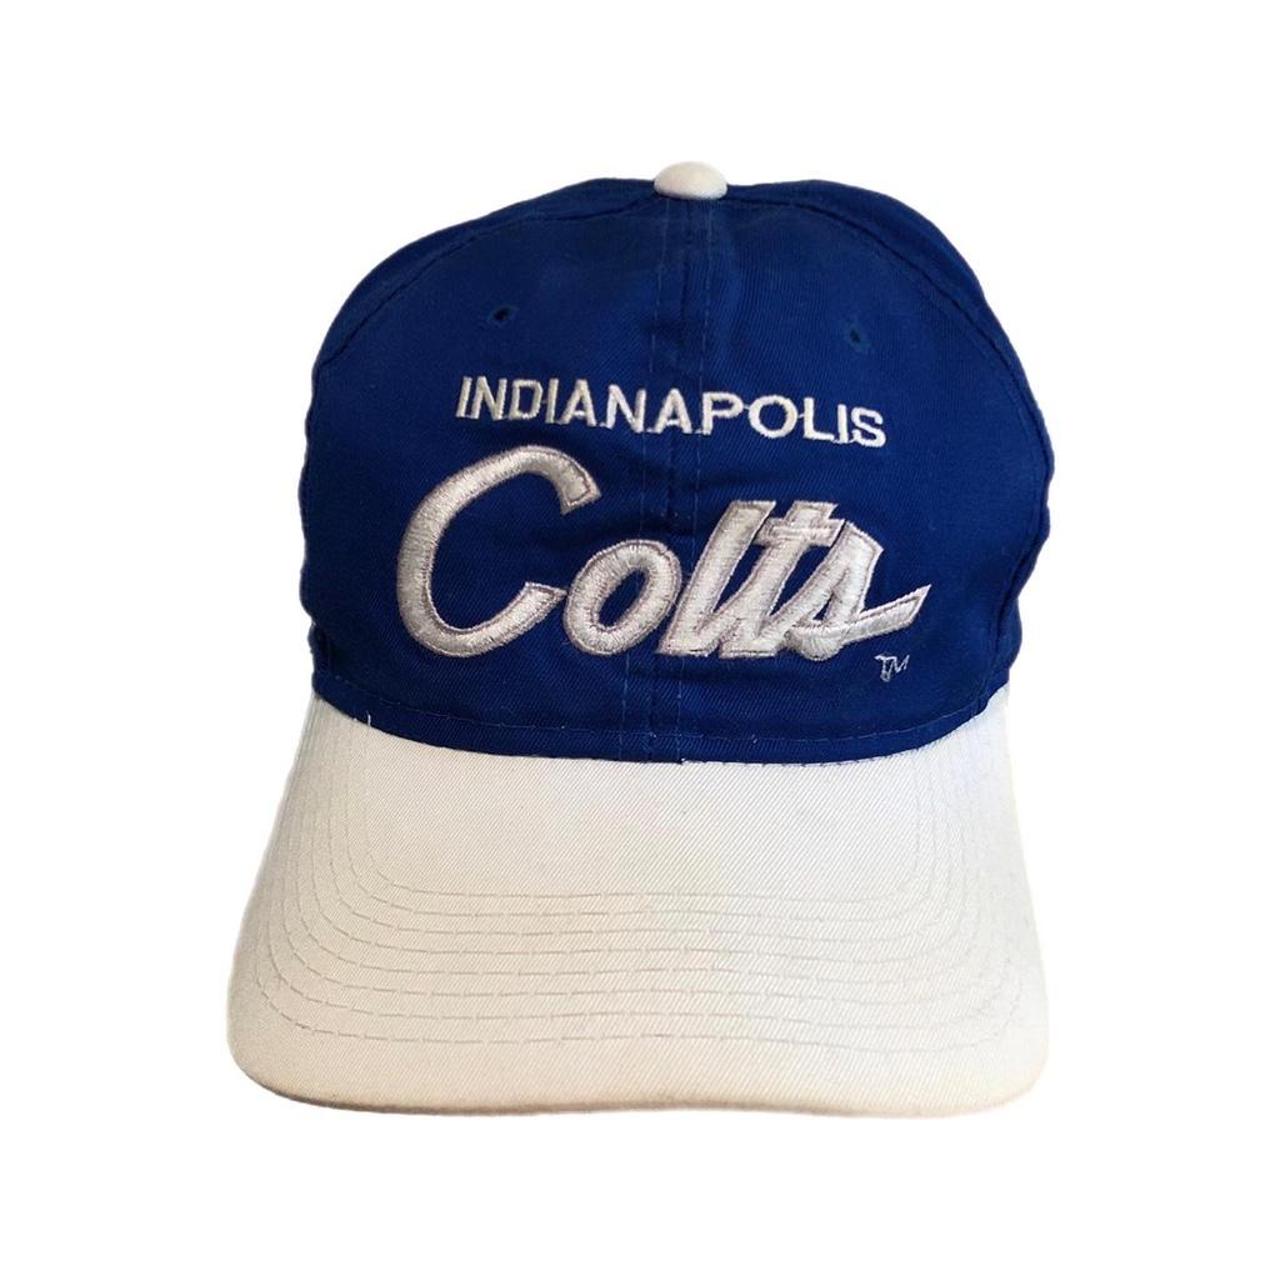 white colts hat